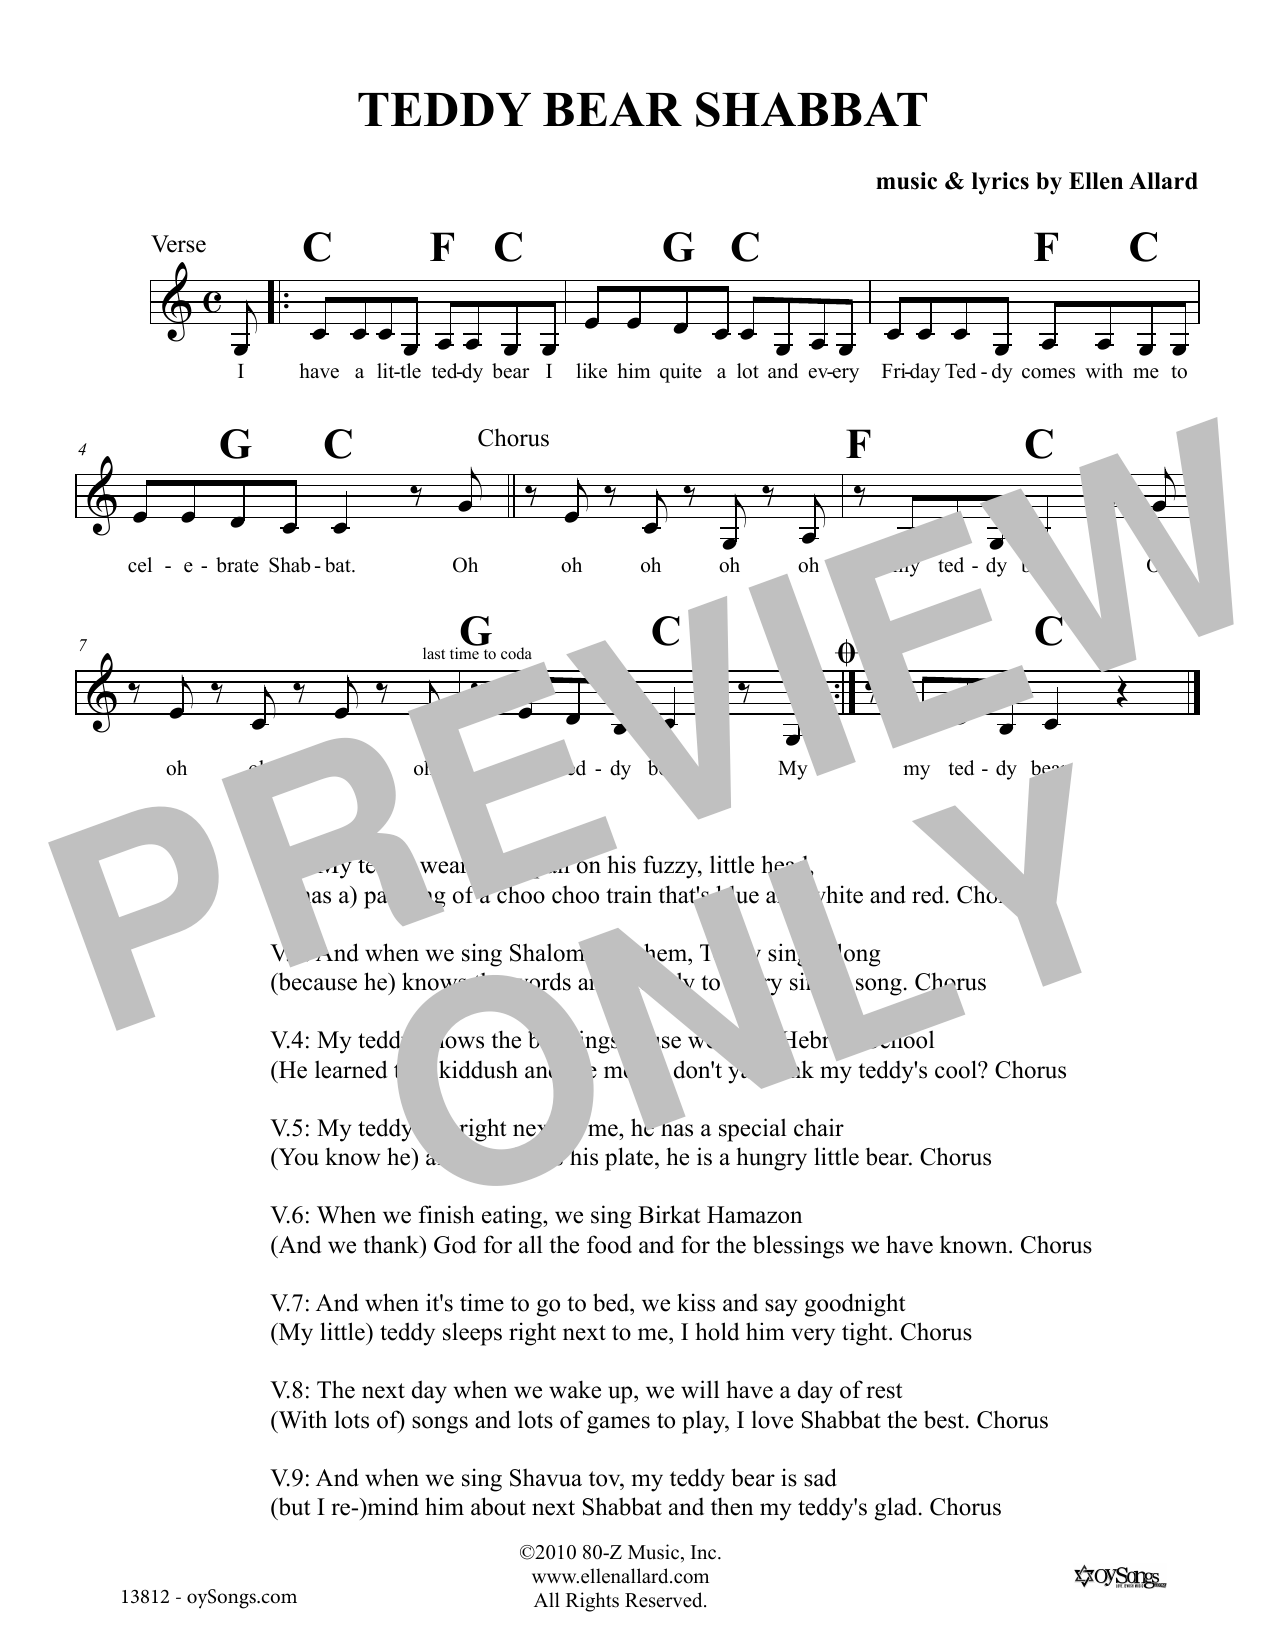 Ellen Allard Teddy Bear Shabbat sheet music notes and chords arranged for Lead Sheet / Fake Book